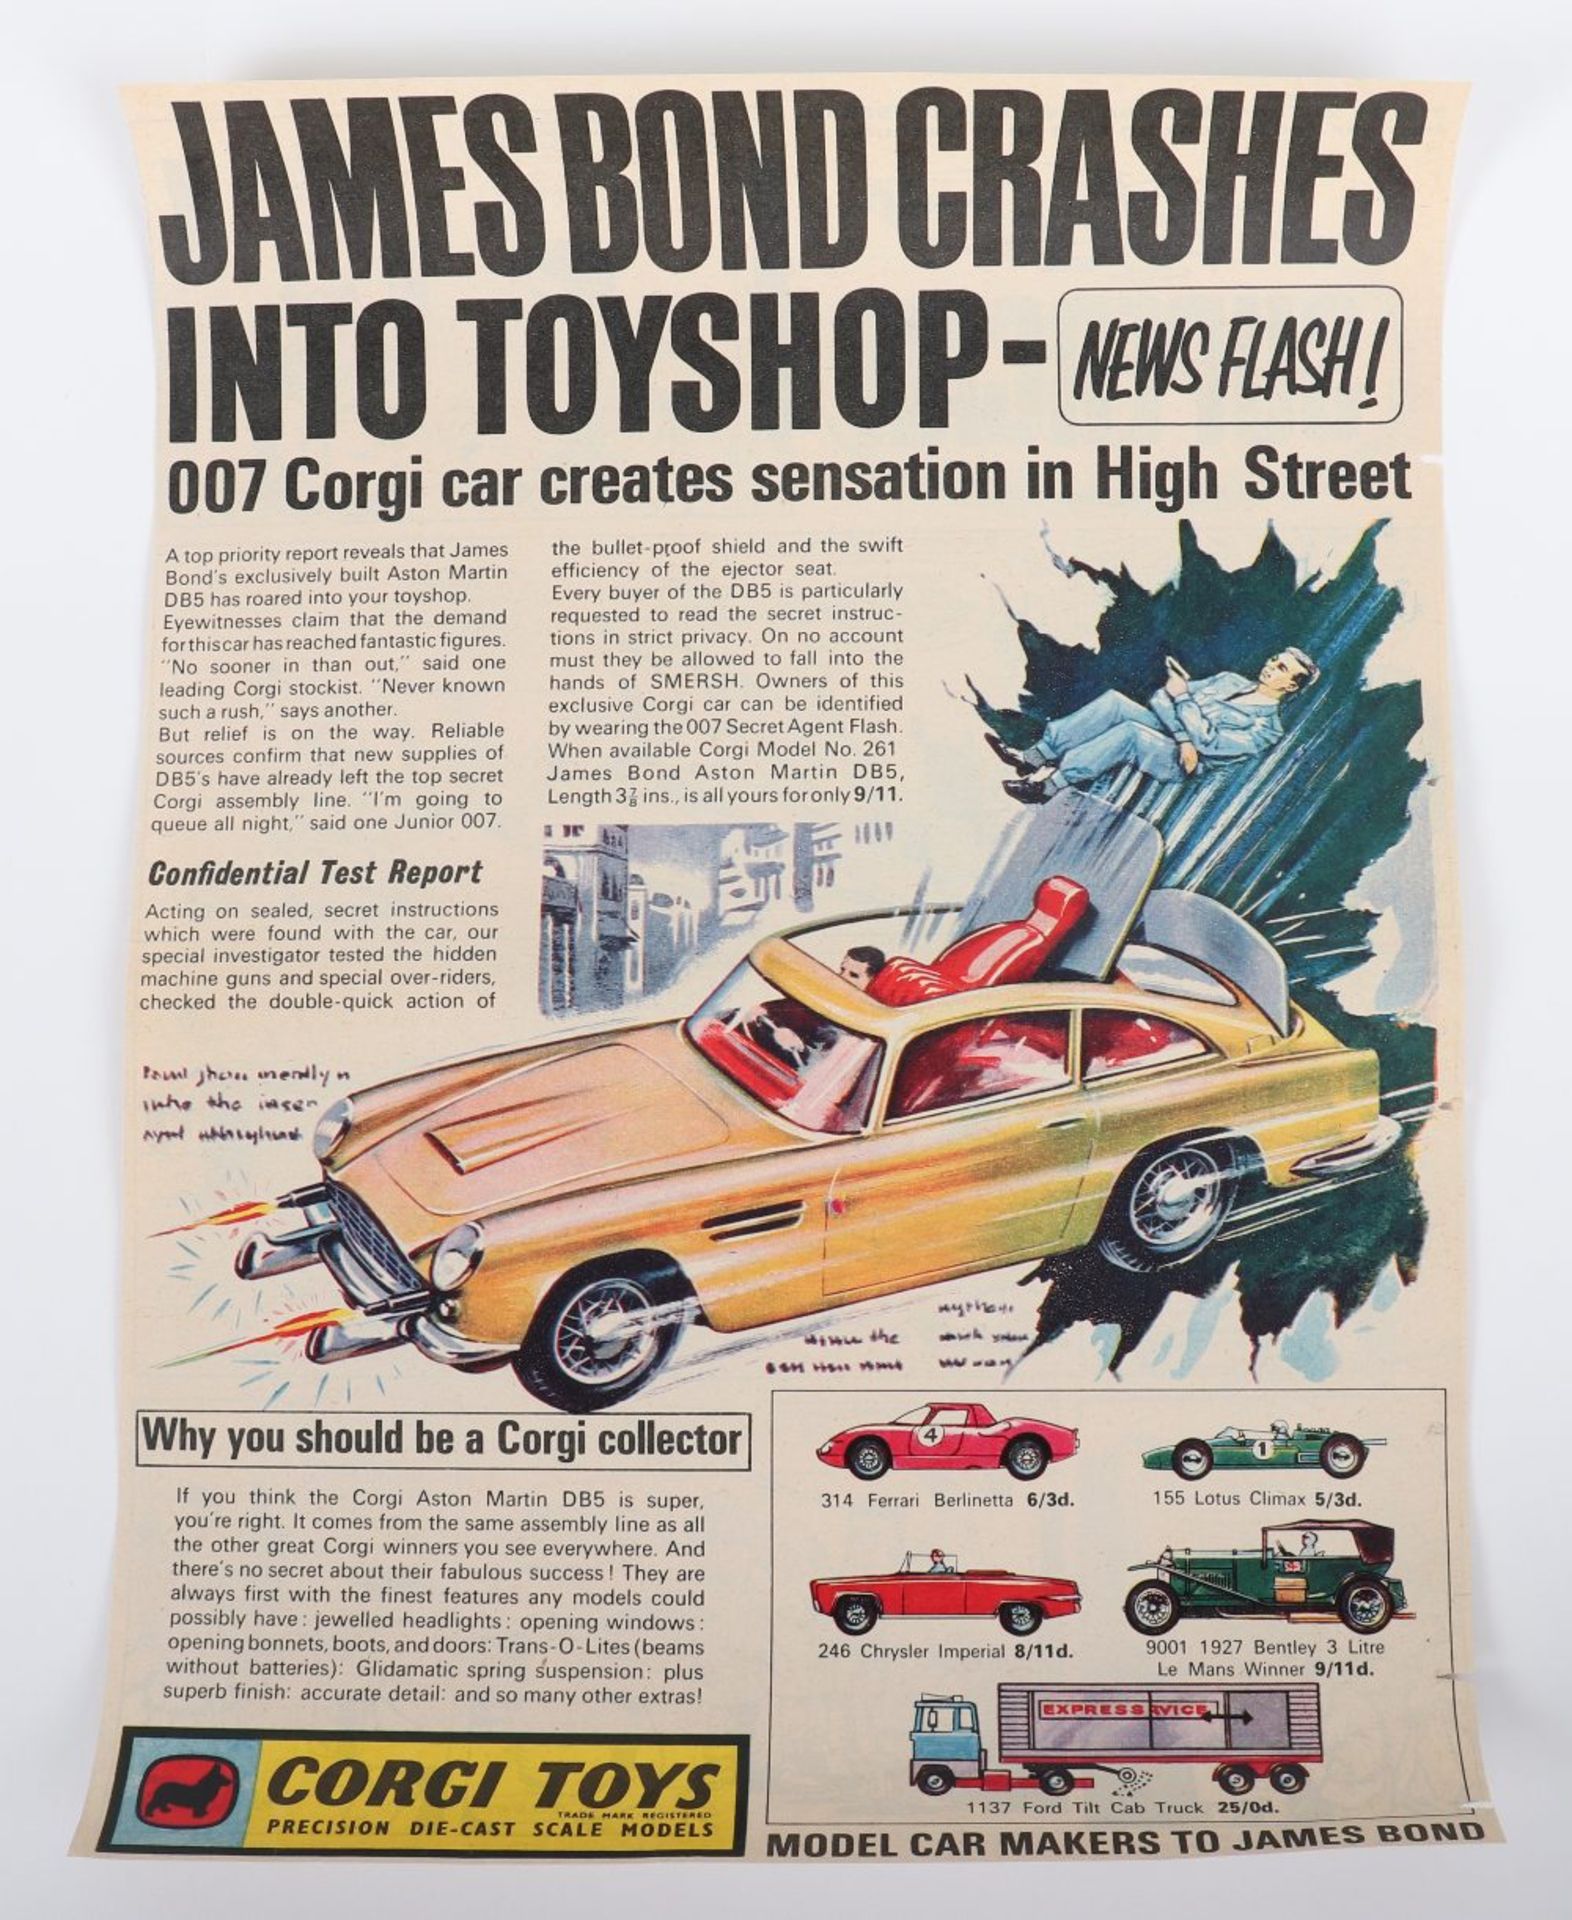 Corgi Toys 261 James Bond Aston Martin D.B.5 from the Film “Goldfinger” - Image 11 of 11